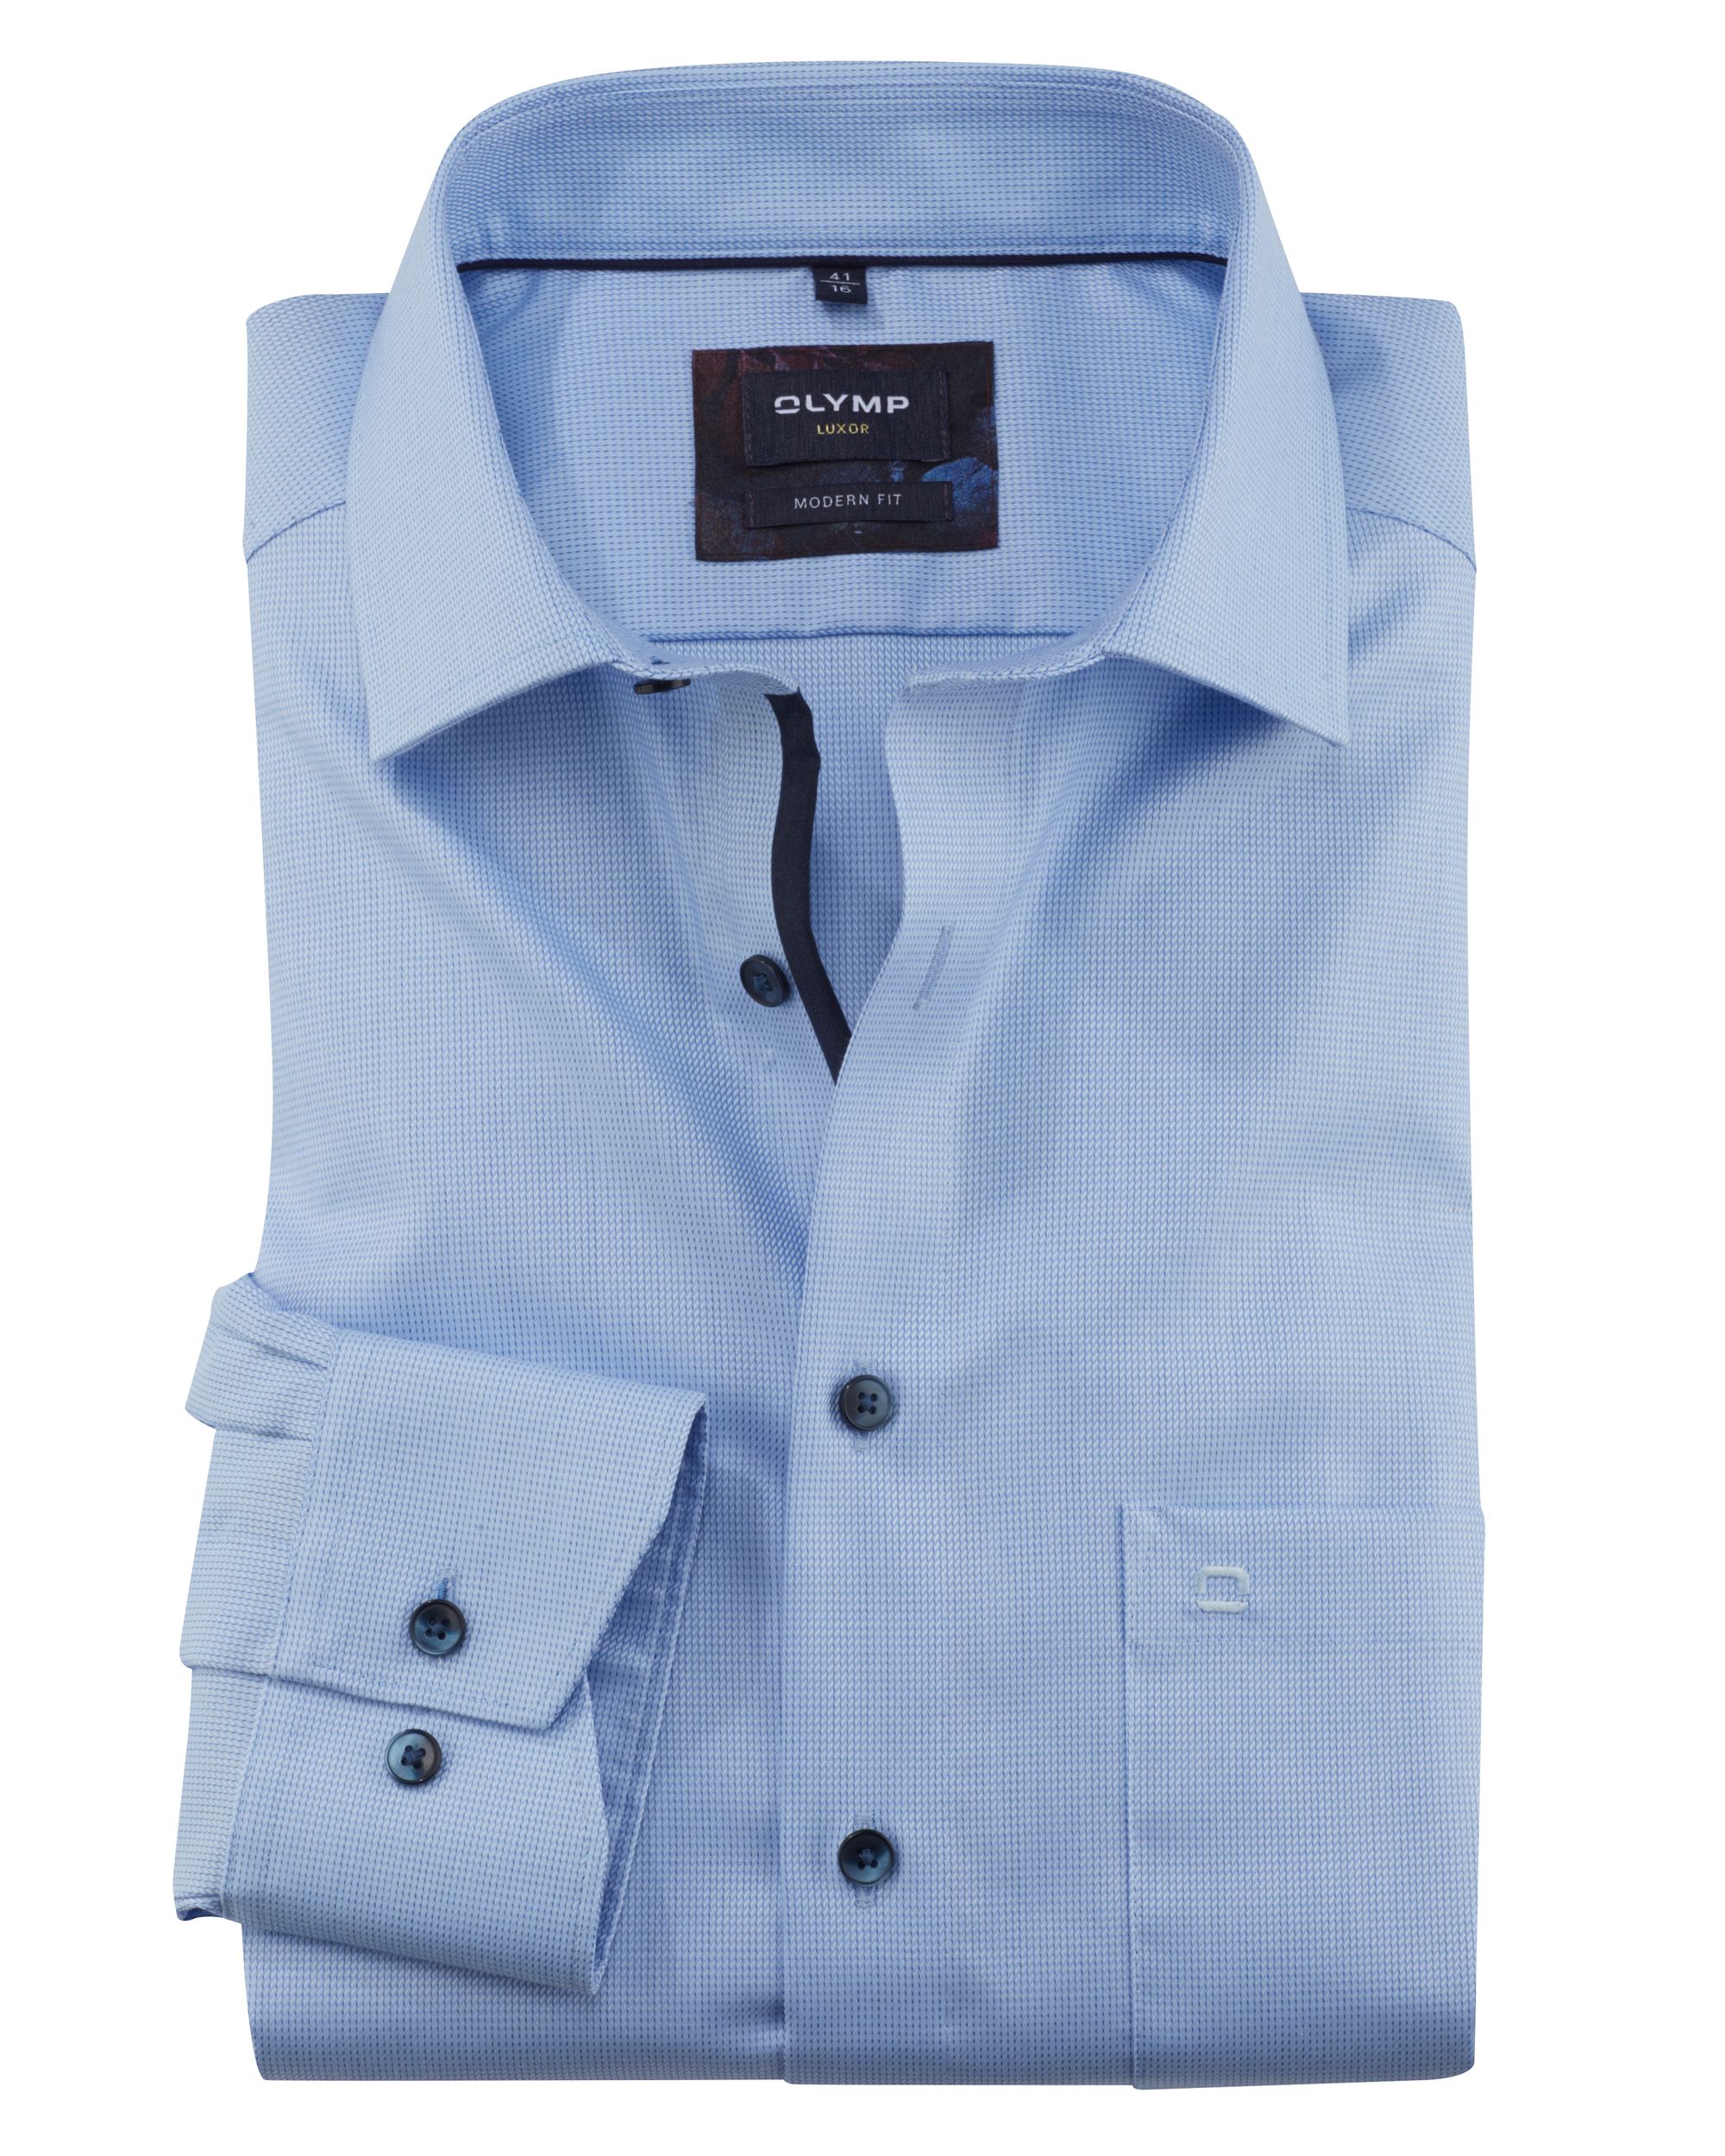 OLYMP Modern Fit Overhemd LM Blauw 080220-001-47